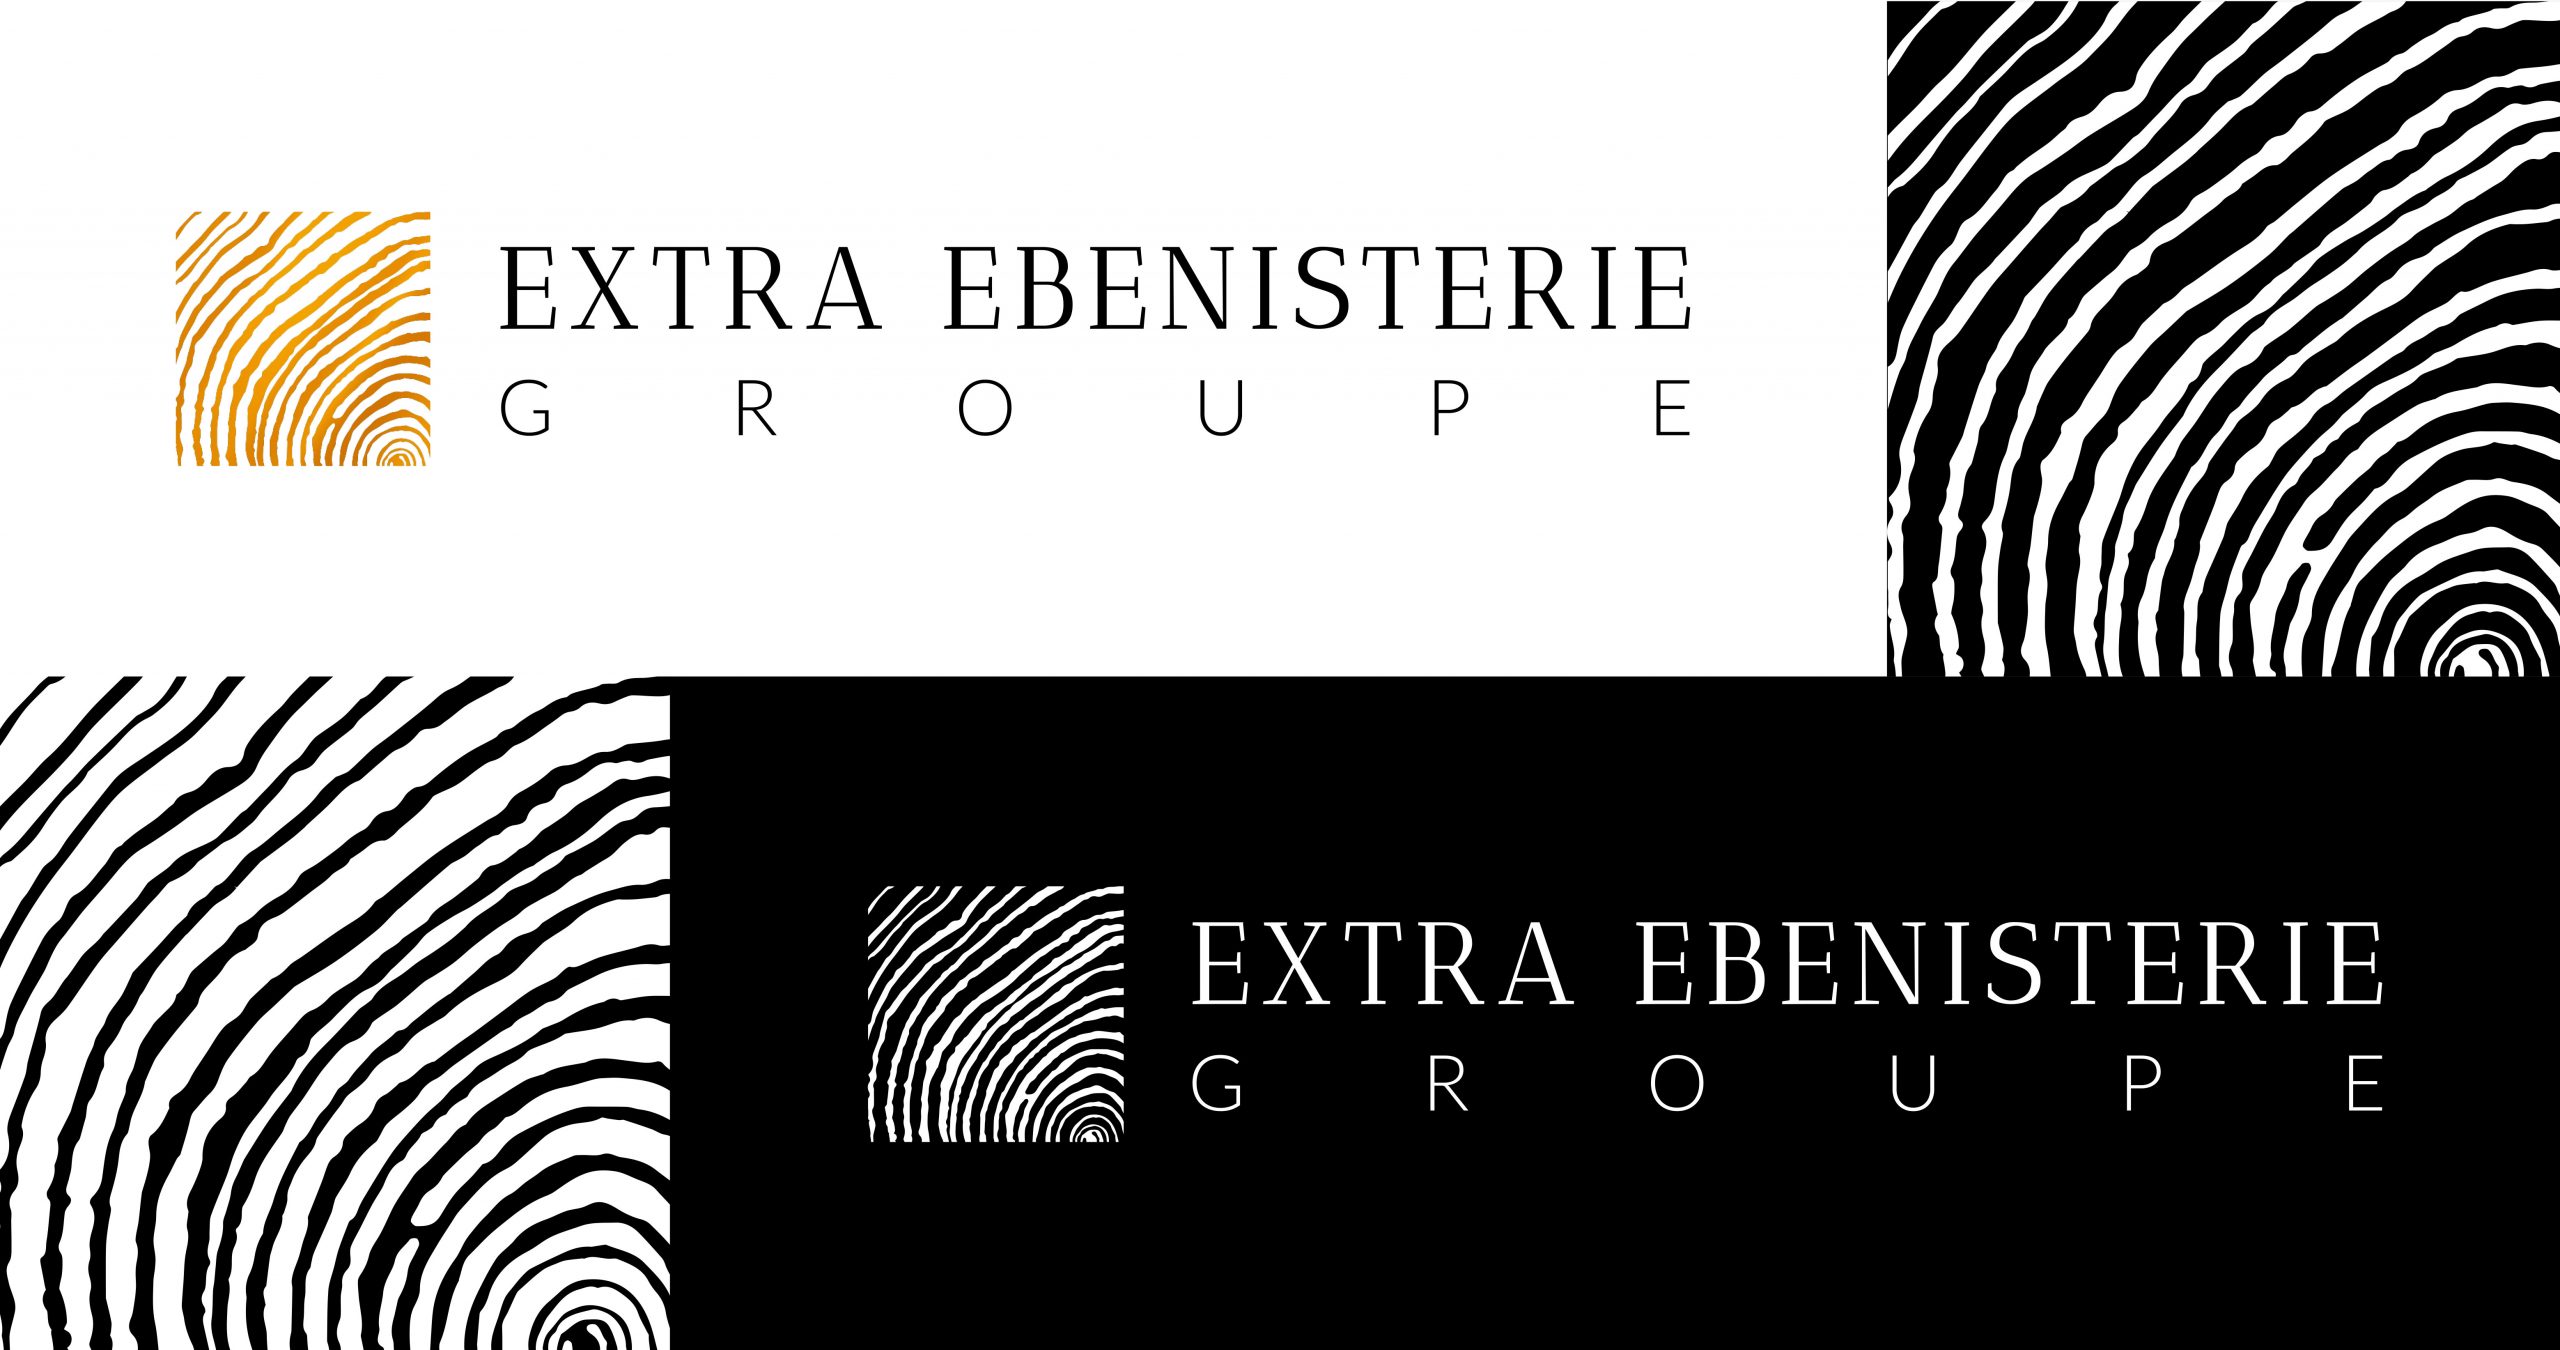 Extra-Ebenisterie-logo